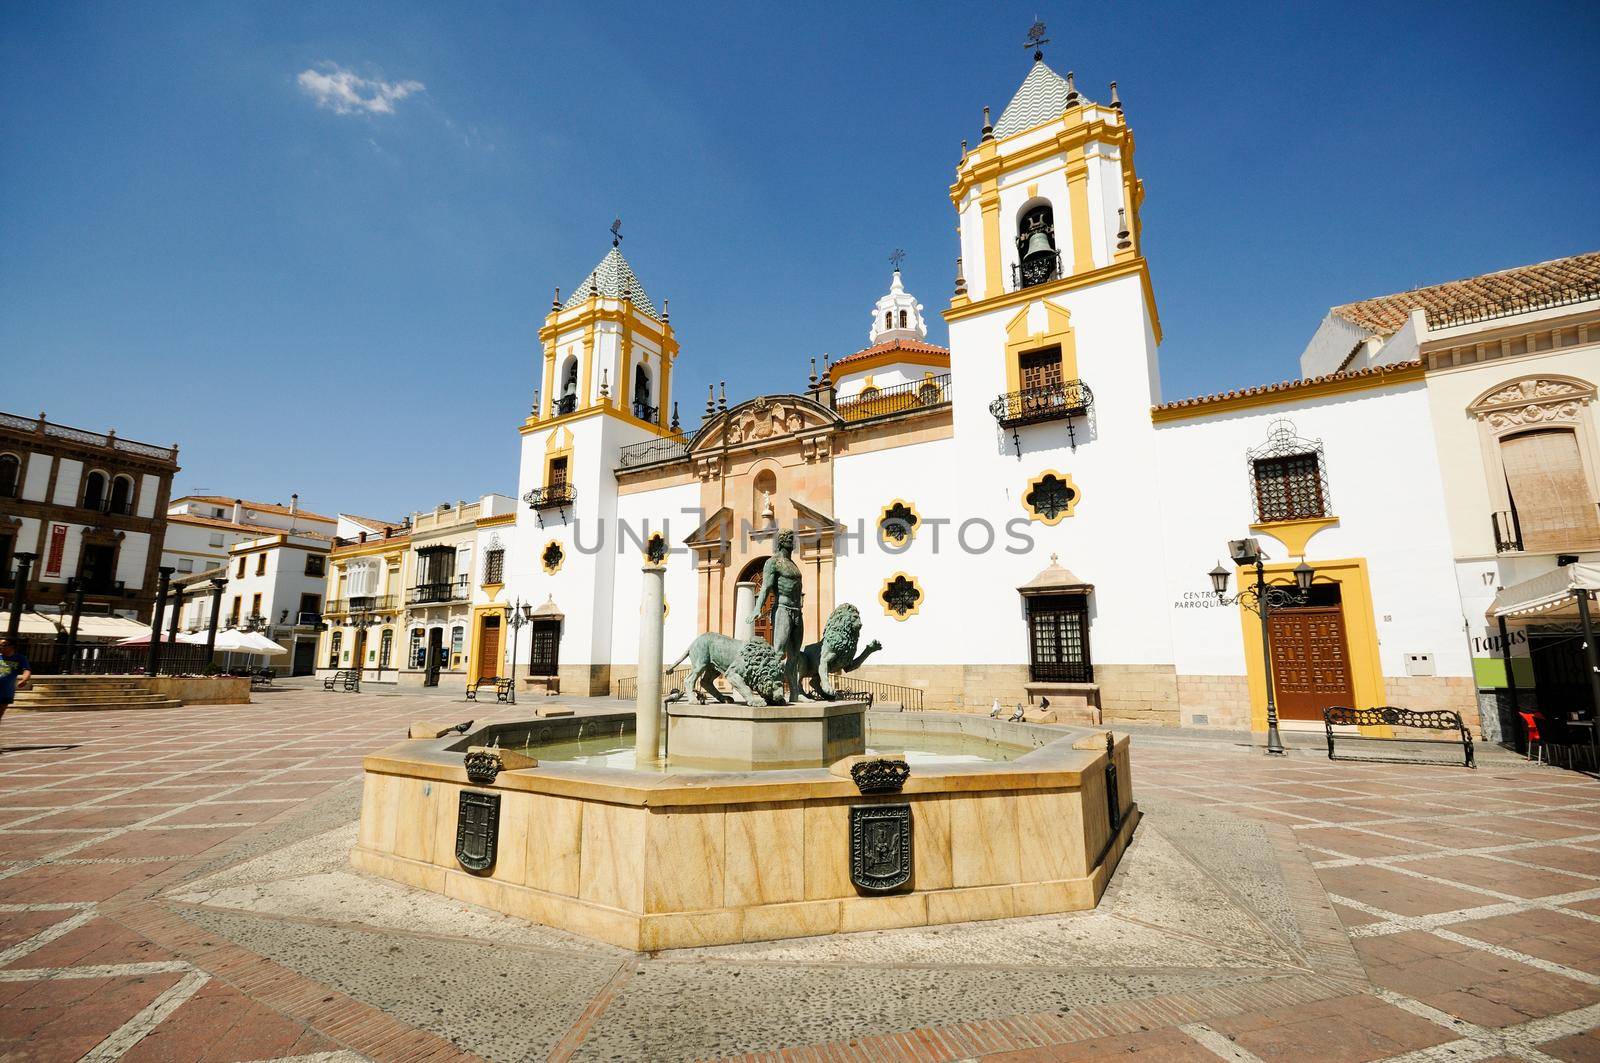 Ronda, Malaga, Andalusia, Spain: Plaza Del Socorro Church by javiindy